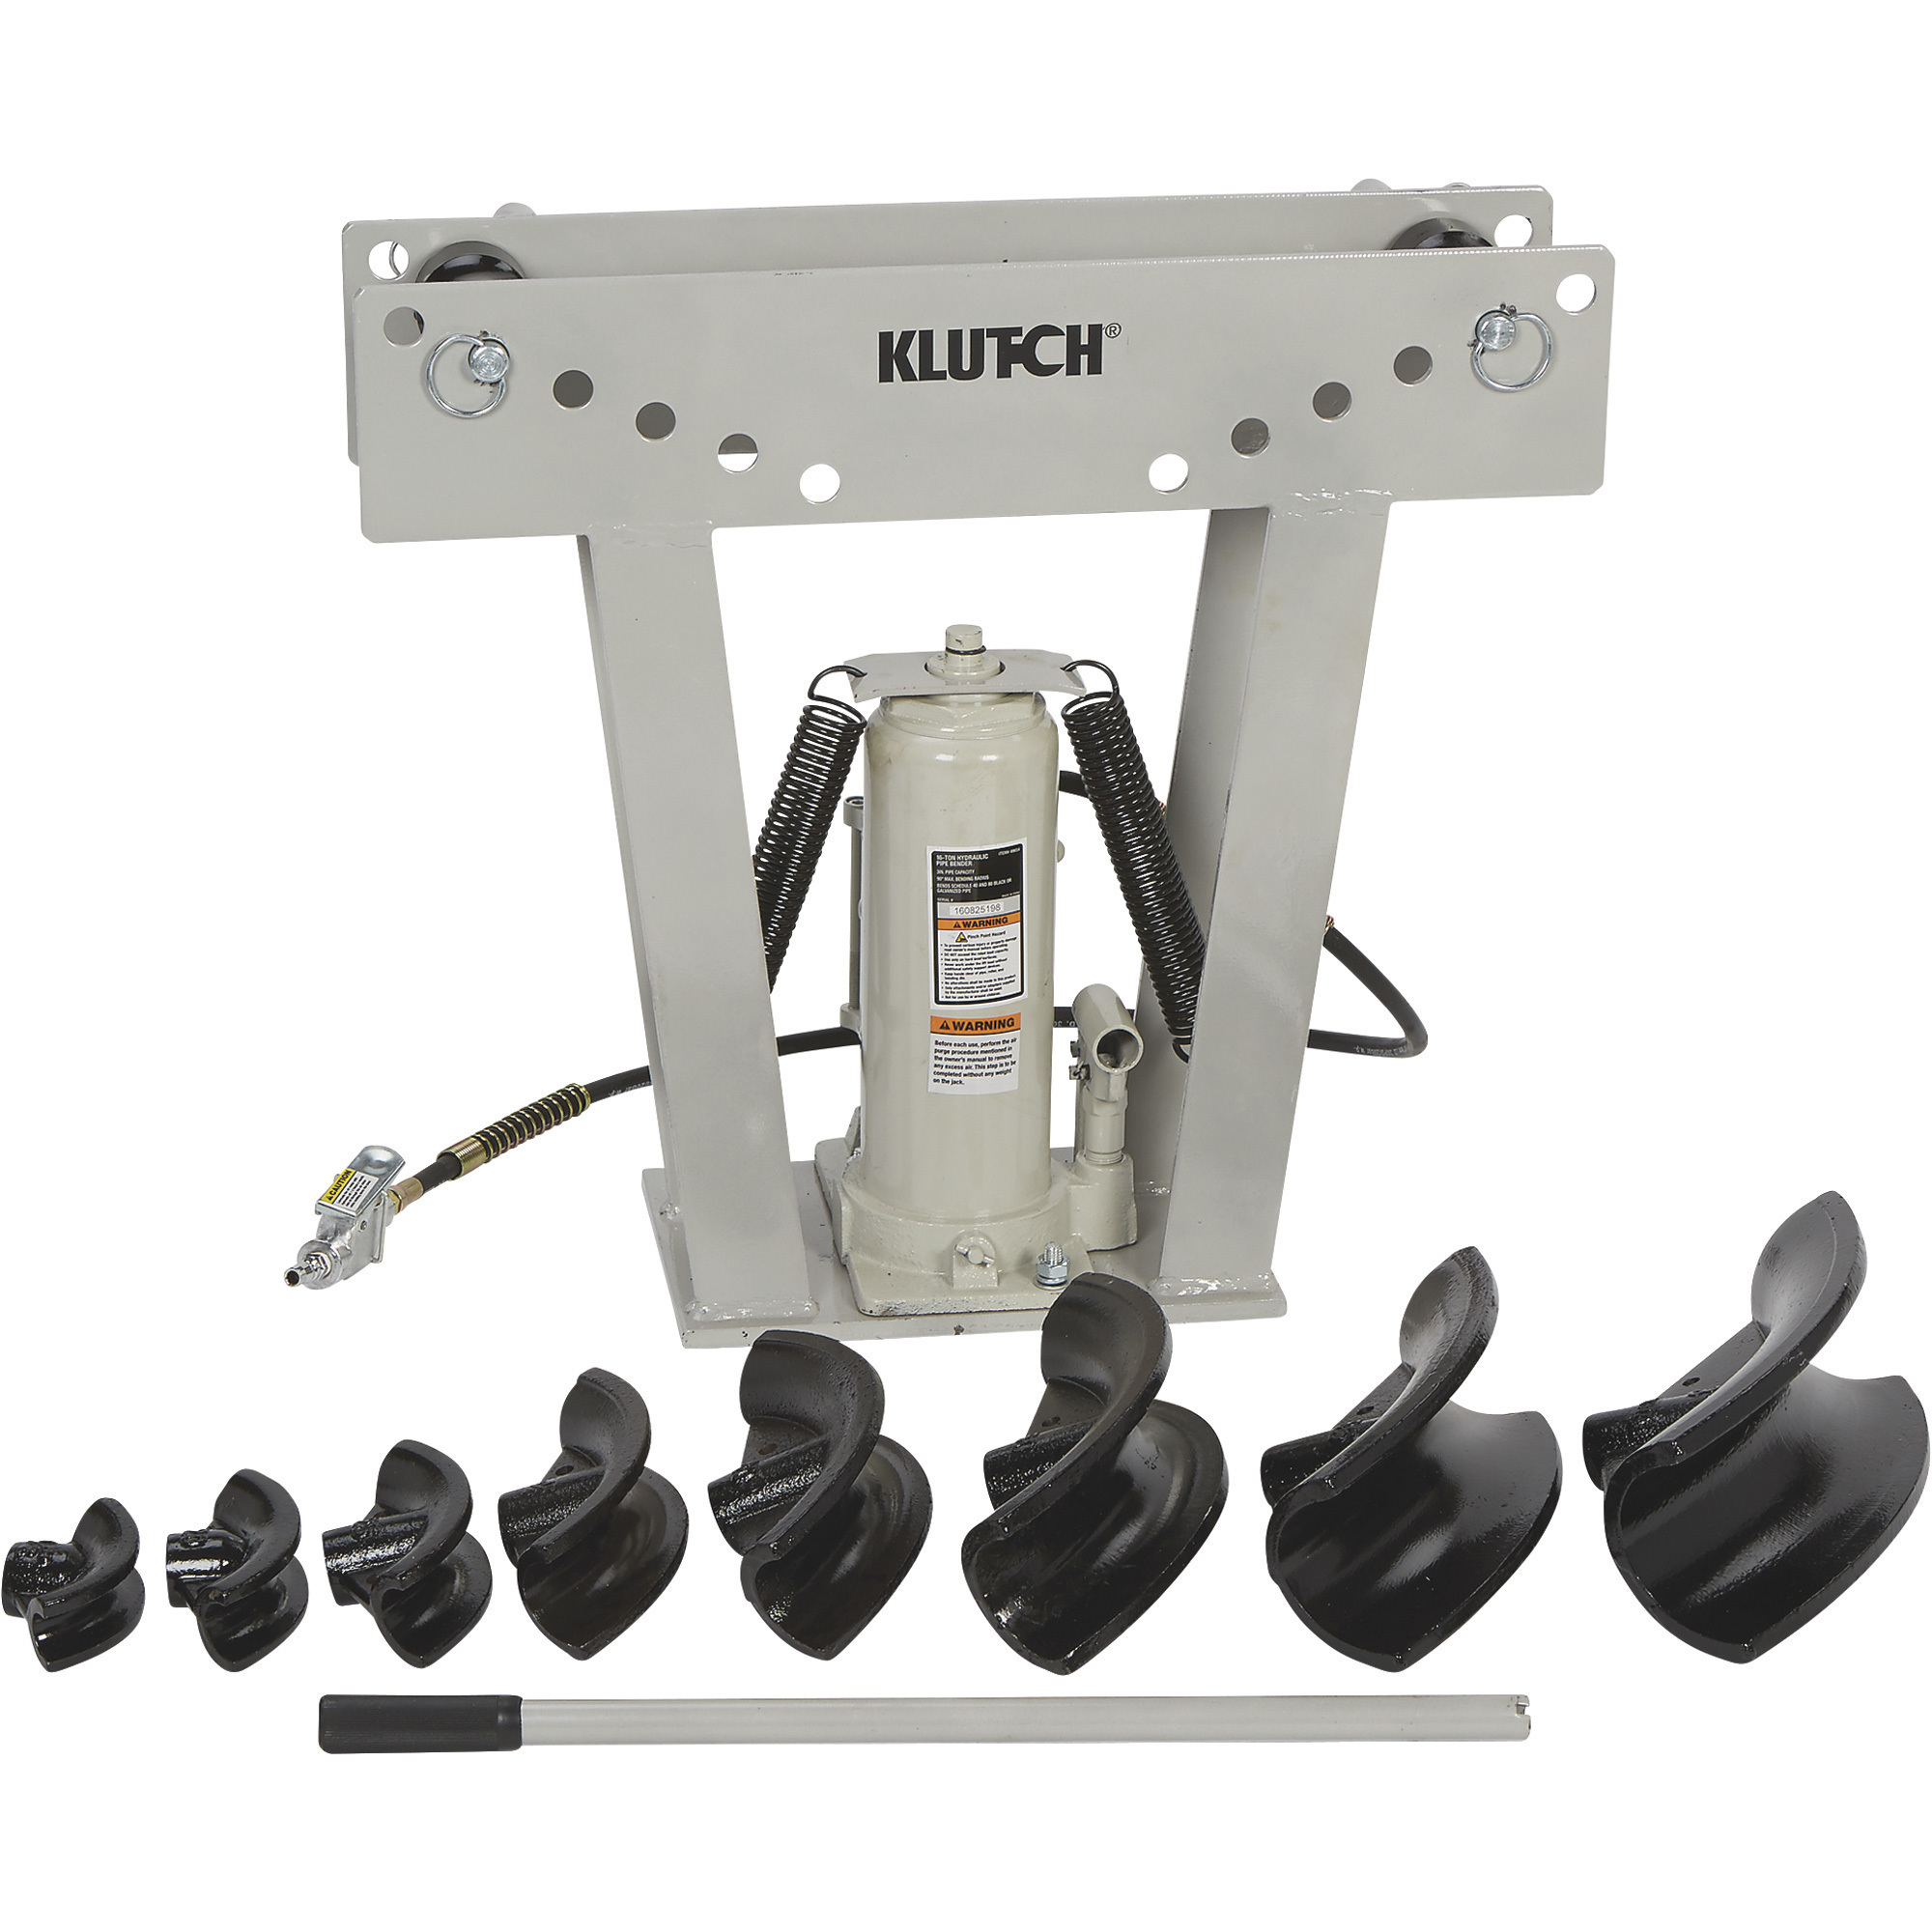 Klutch 16-Ton Air/Hydraulic Pipe Bender, 3Inch Capacity